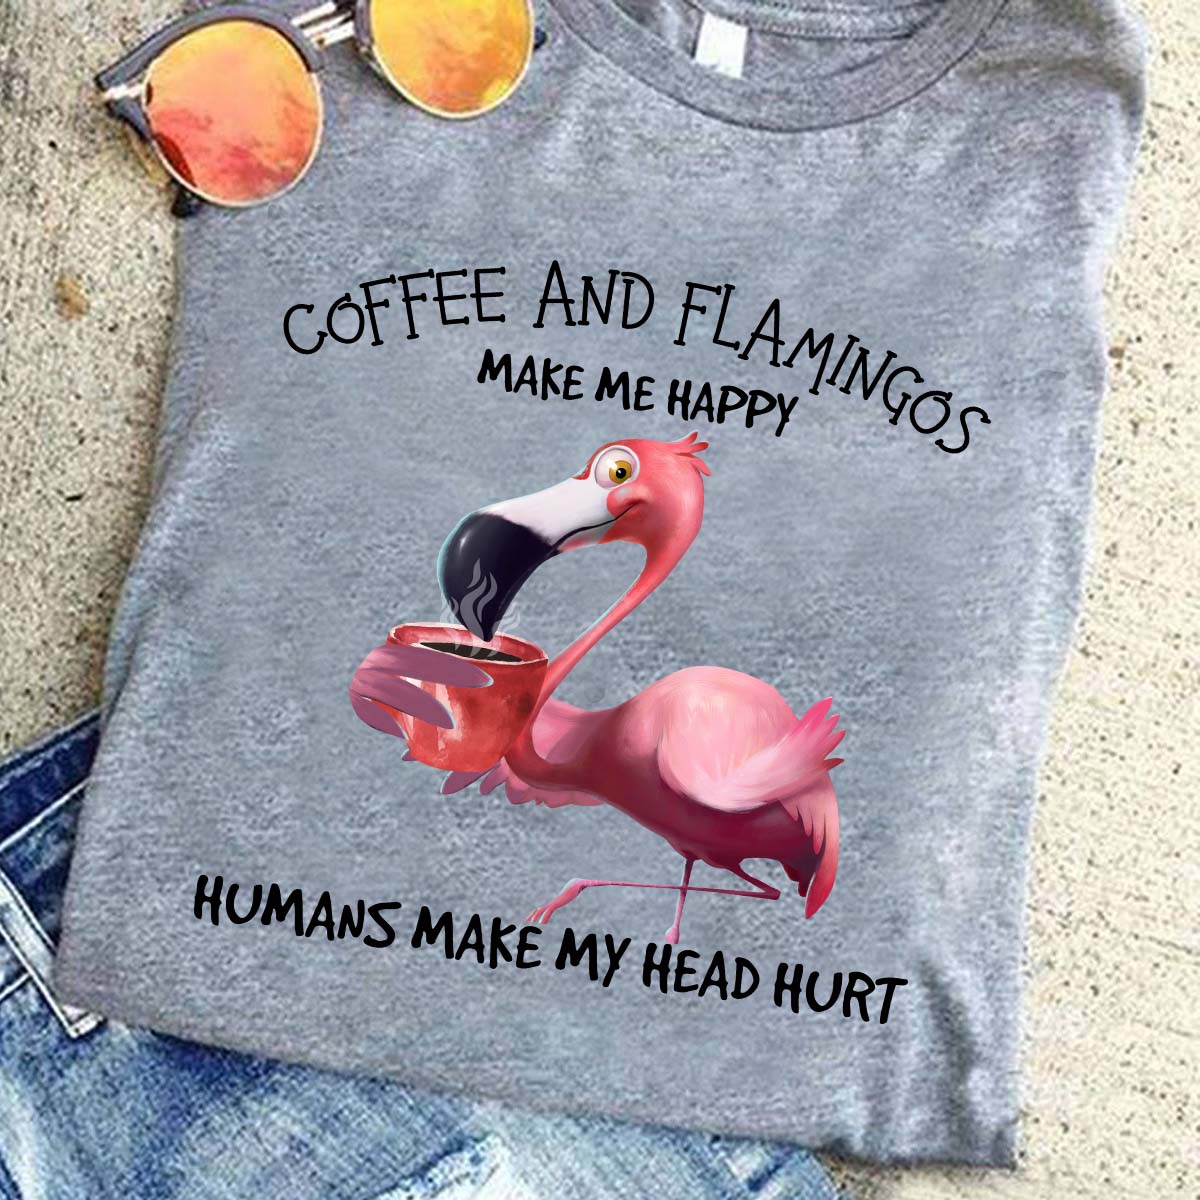 Coffee and flamingos make me happy humans make my head hurt